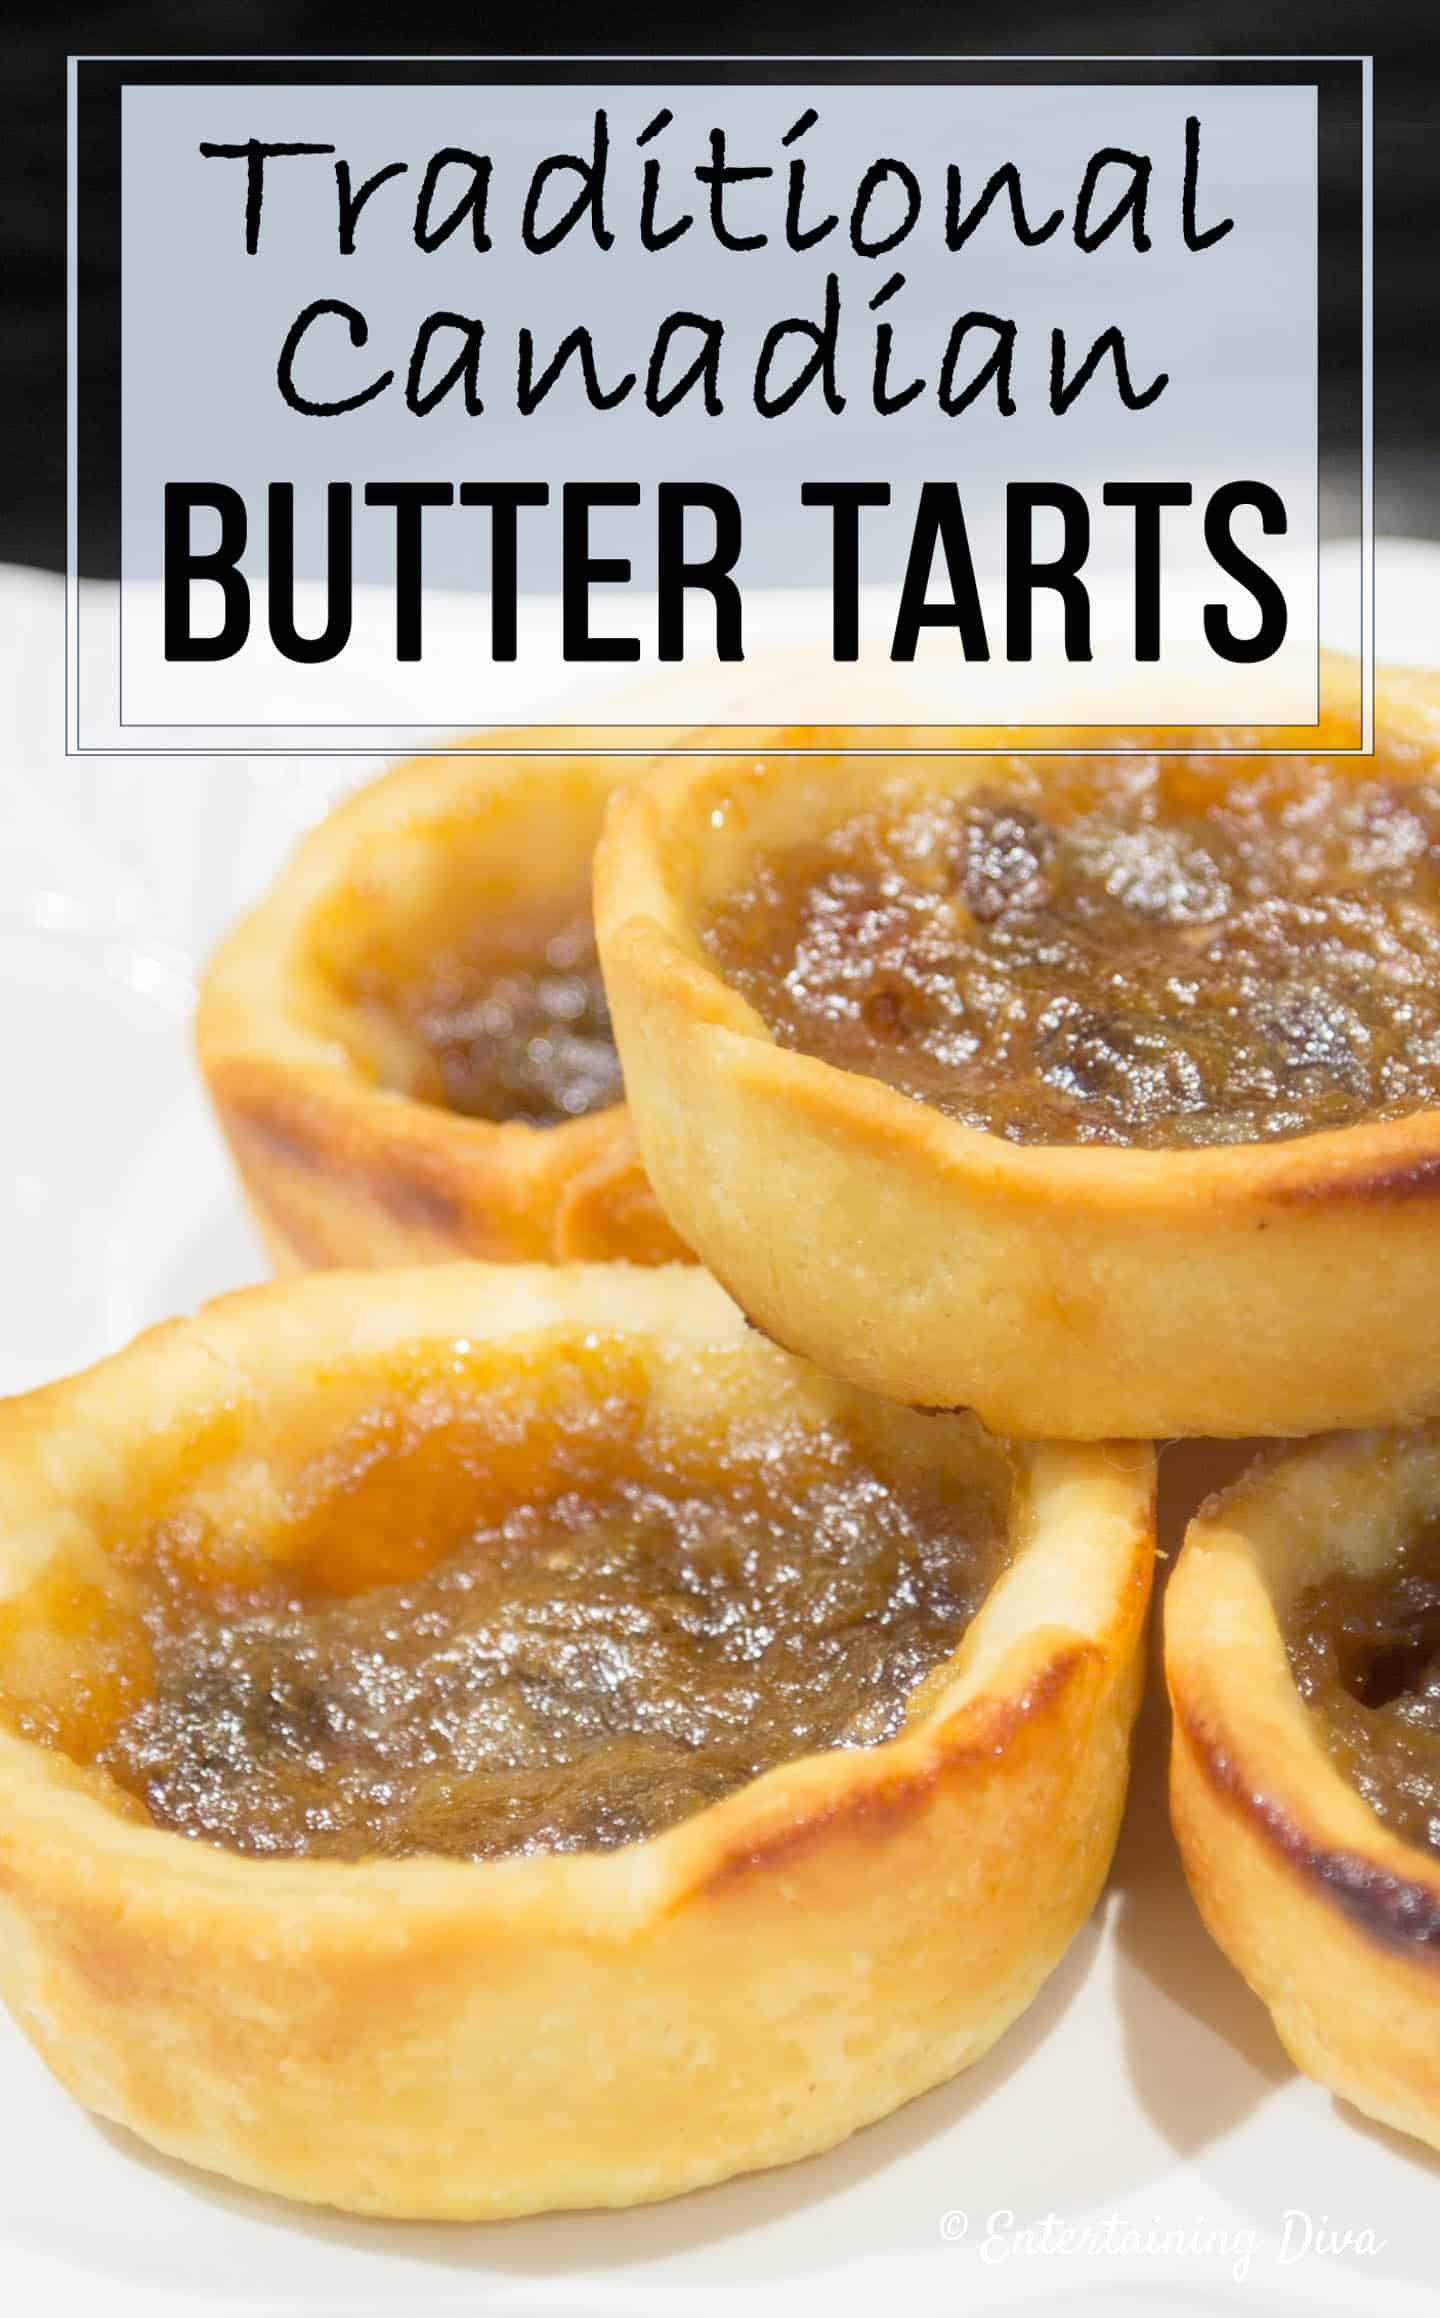 Canadian butter tarts recipe